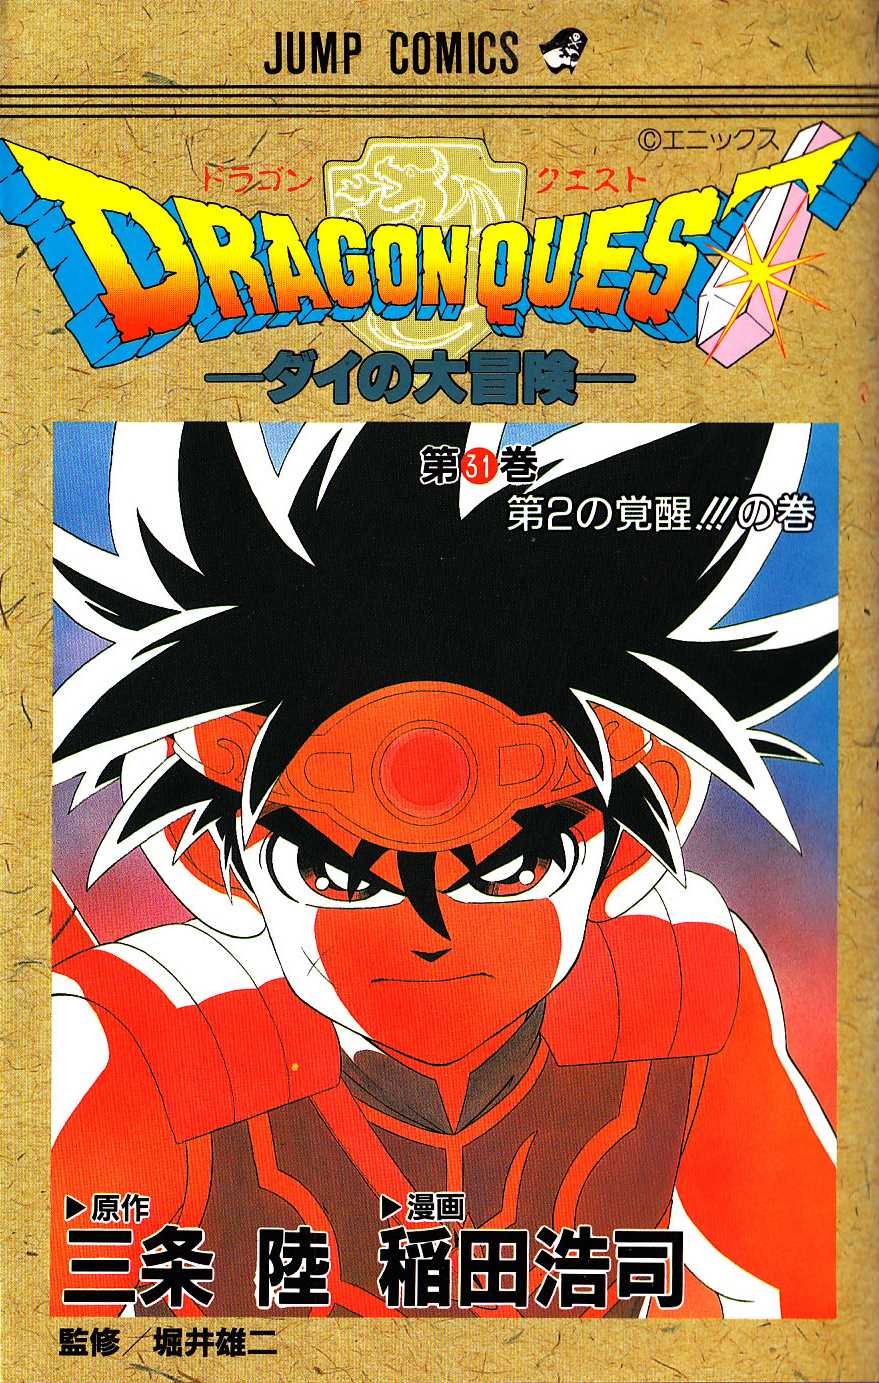 Dragon Quest - Dai no Daibouken Vol.31 (January 1996)